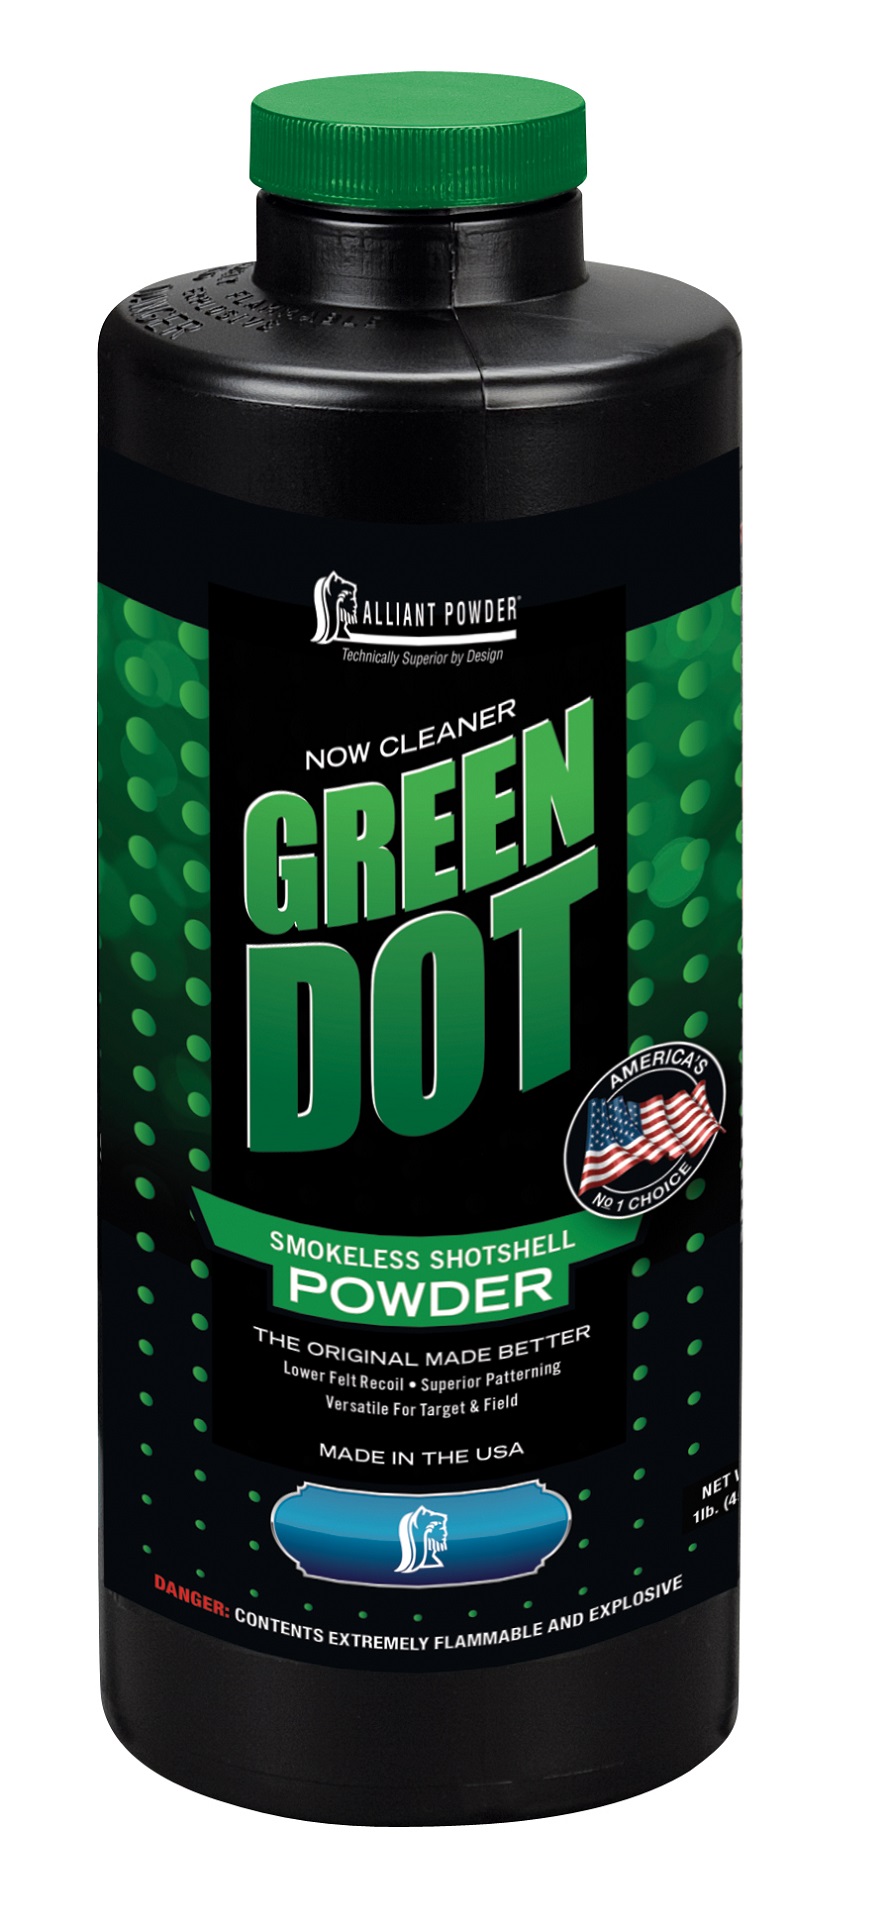 Alliant Powder Releases Improved Green Dot